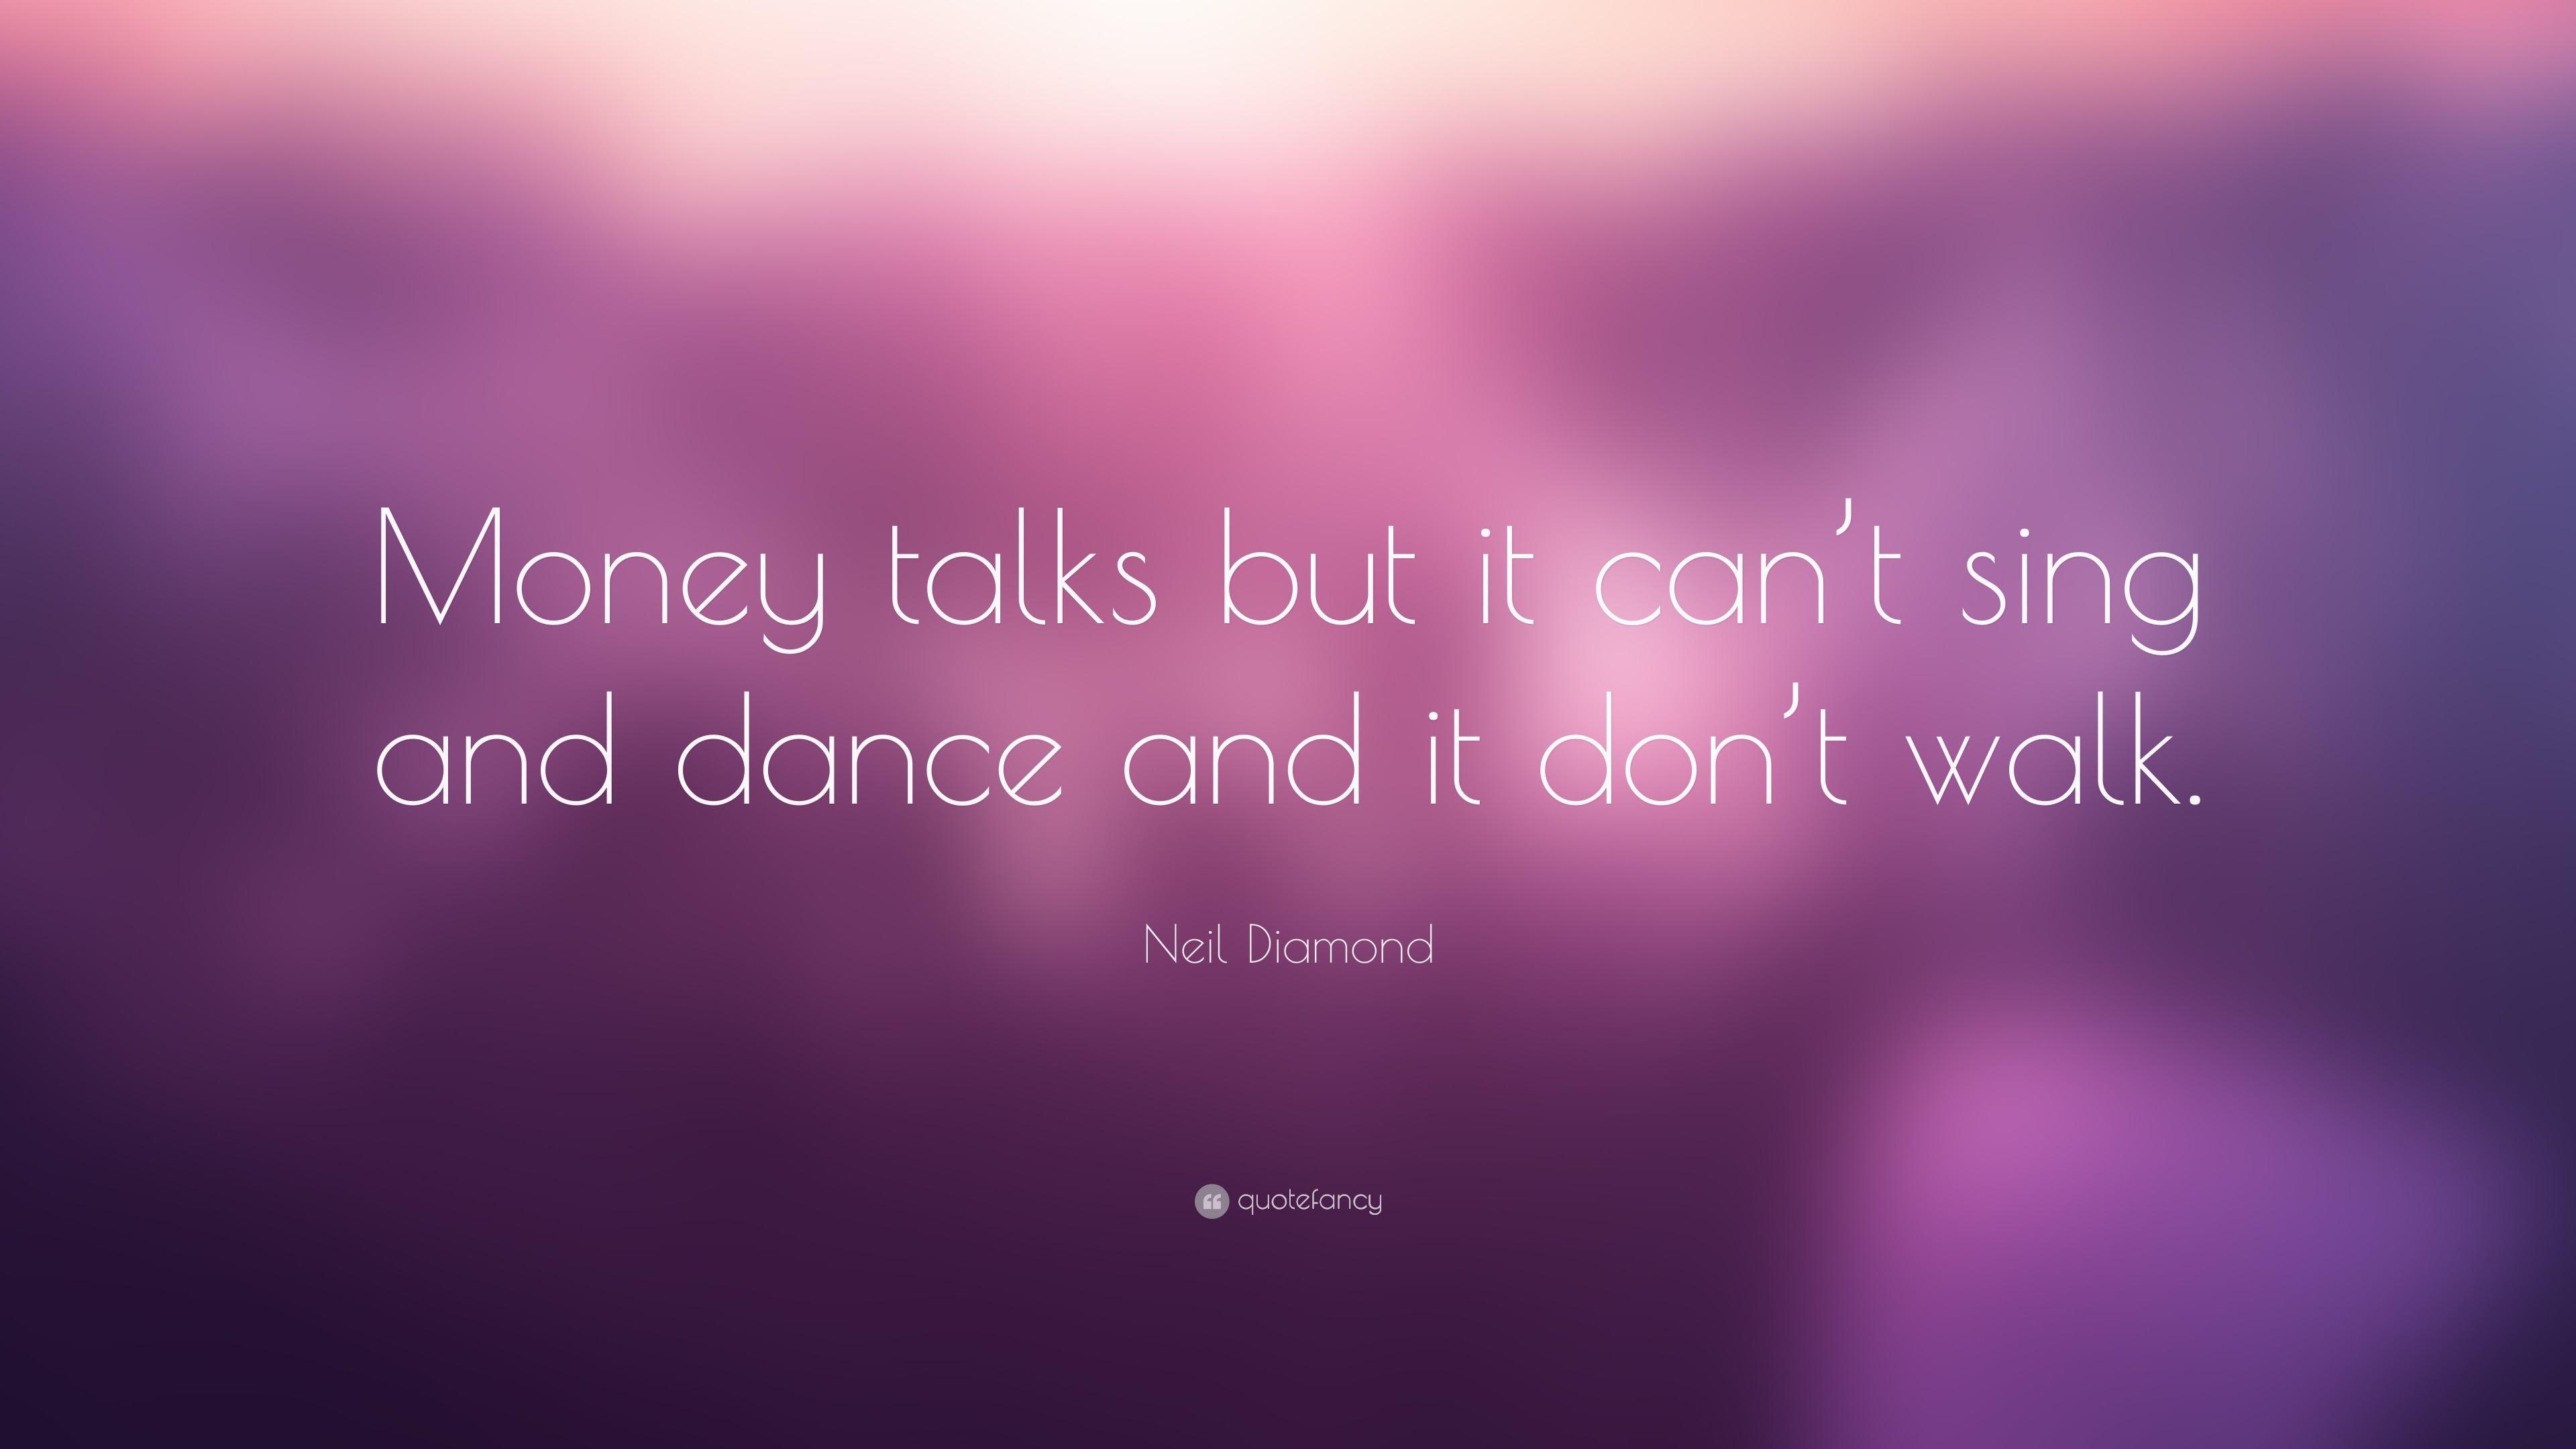 Neil Diamond Quotes 100 Wallpapers Quotefancy